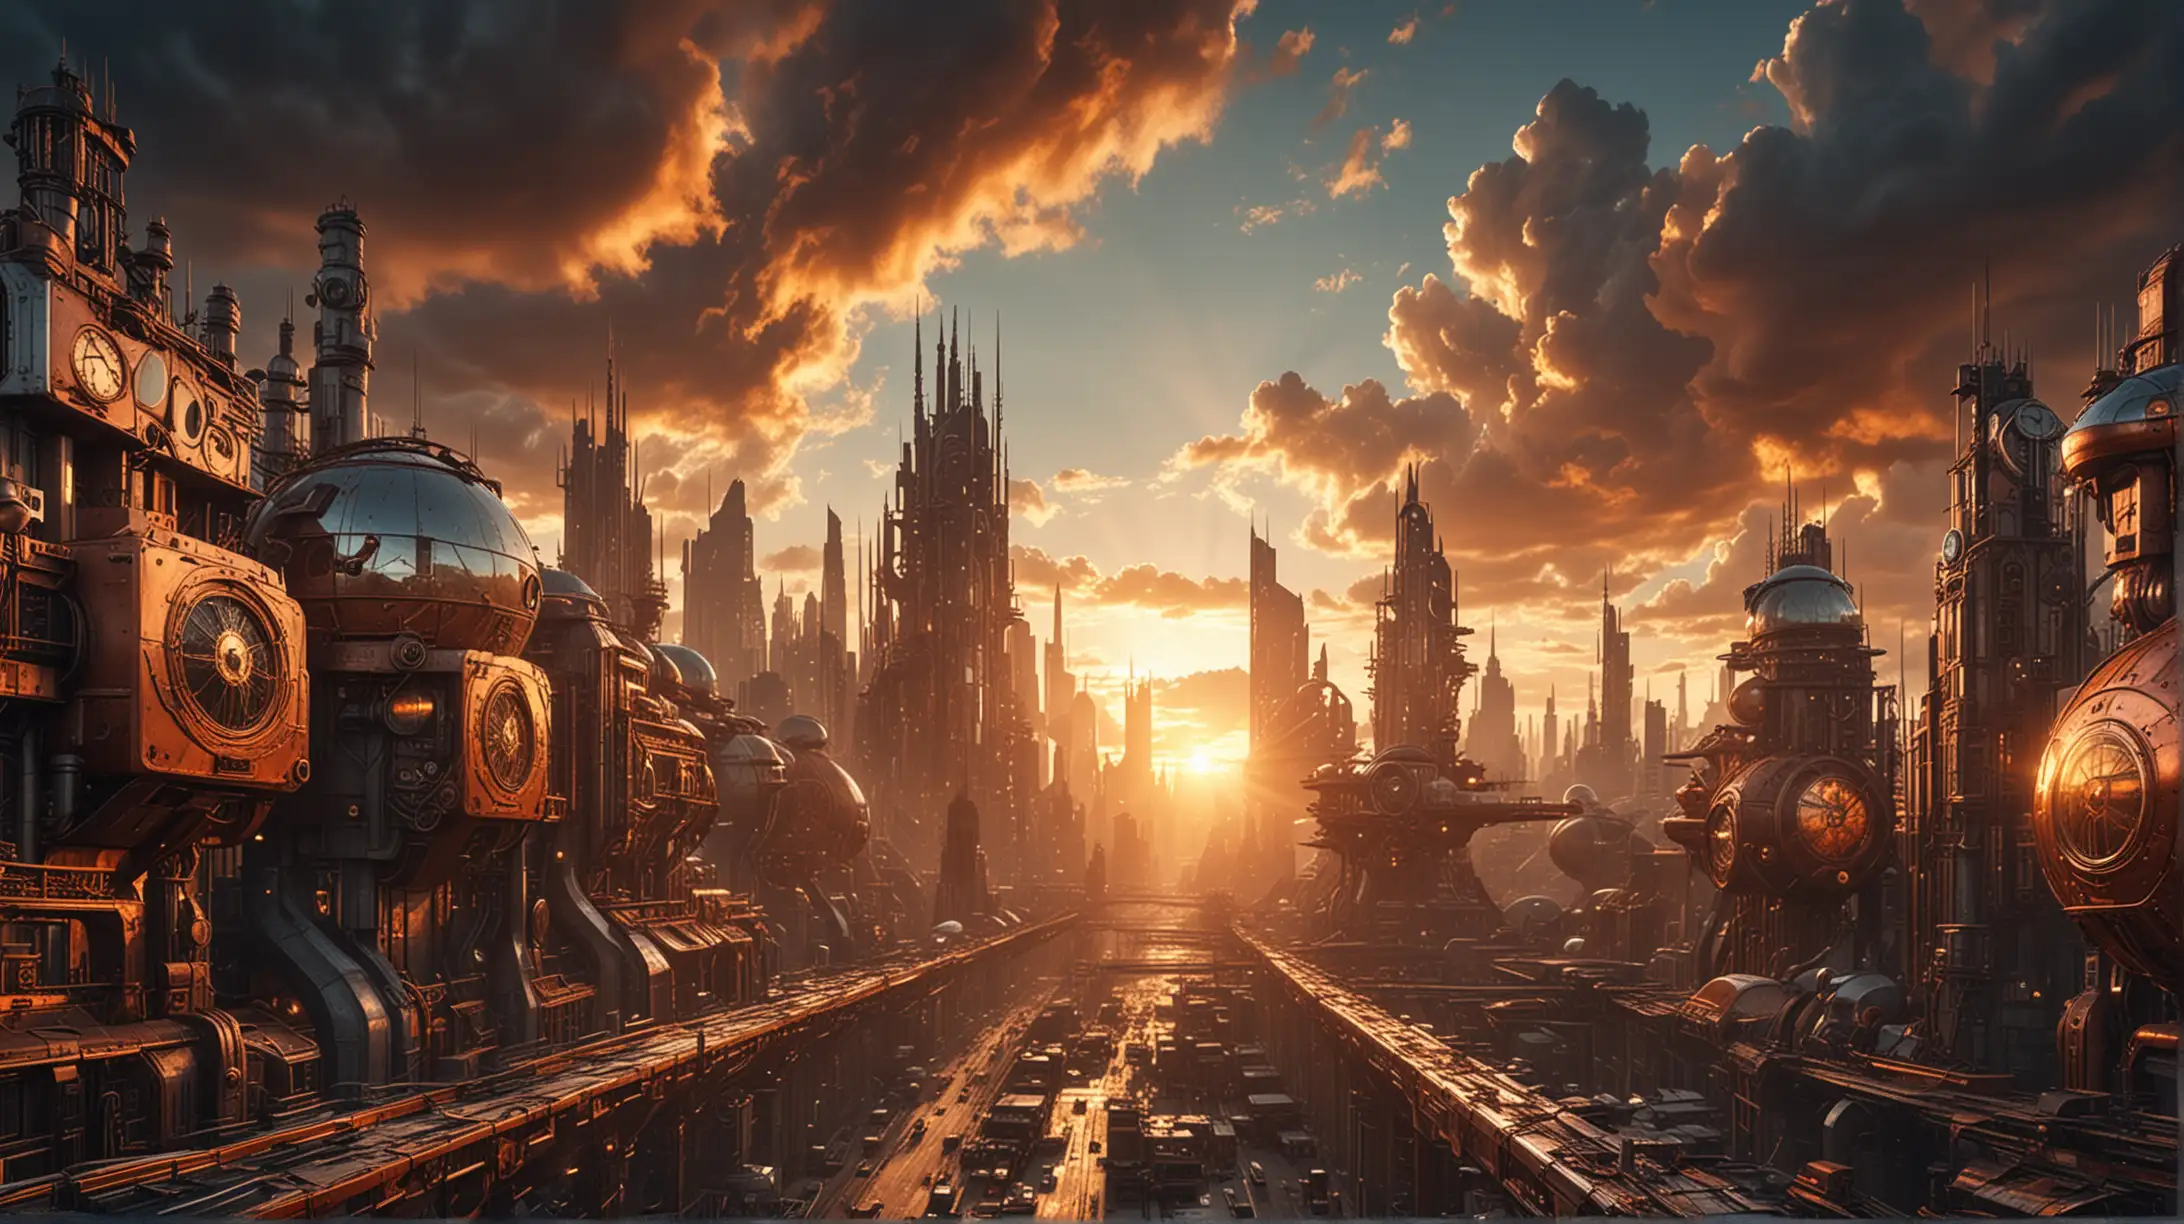 Steampunk Futuristic City Sunrise with Backlit Clouds